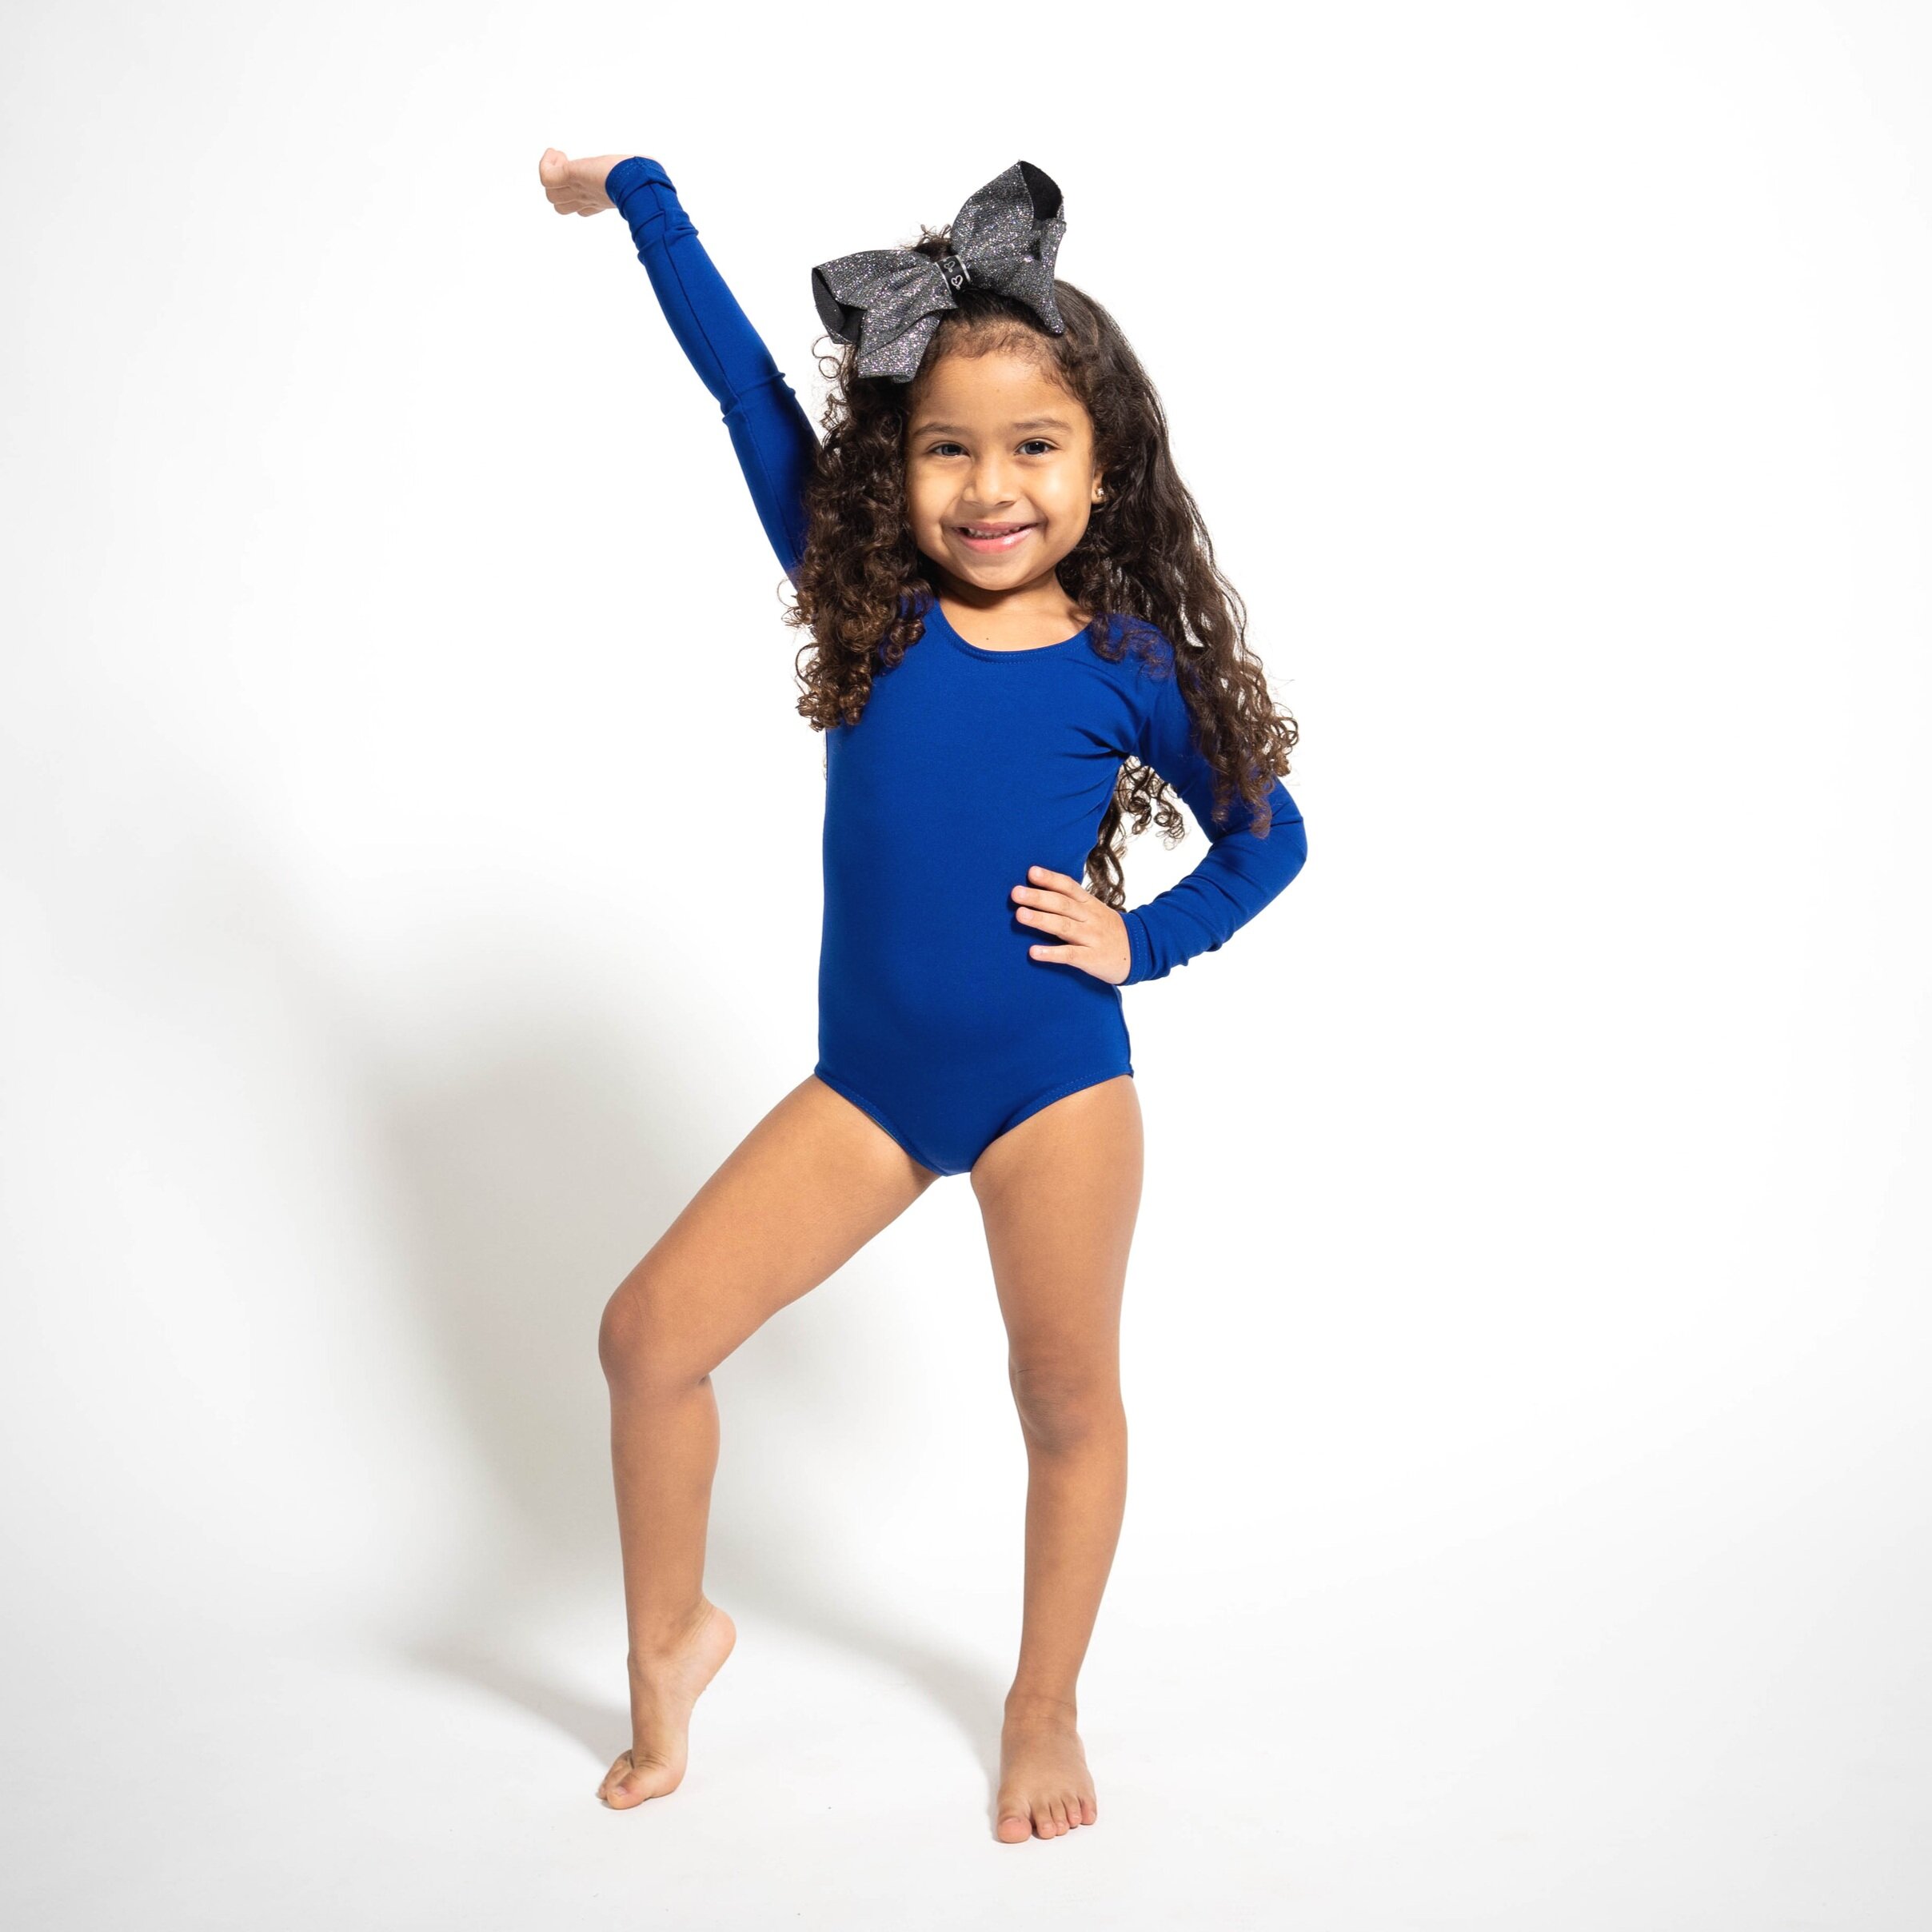 Photo of little girl wearing blue leotard posing. (Copy) (Copy) (Copy) (Copy) (Copy) (Copy) (Copy)